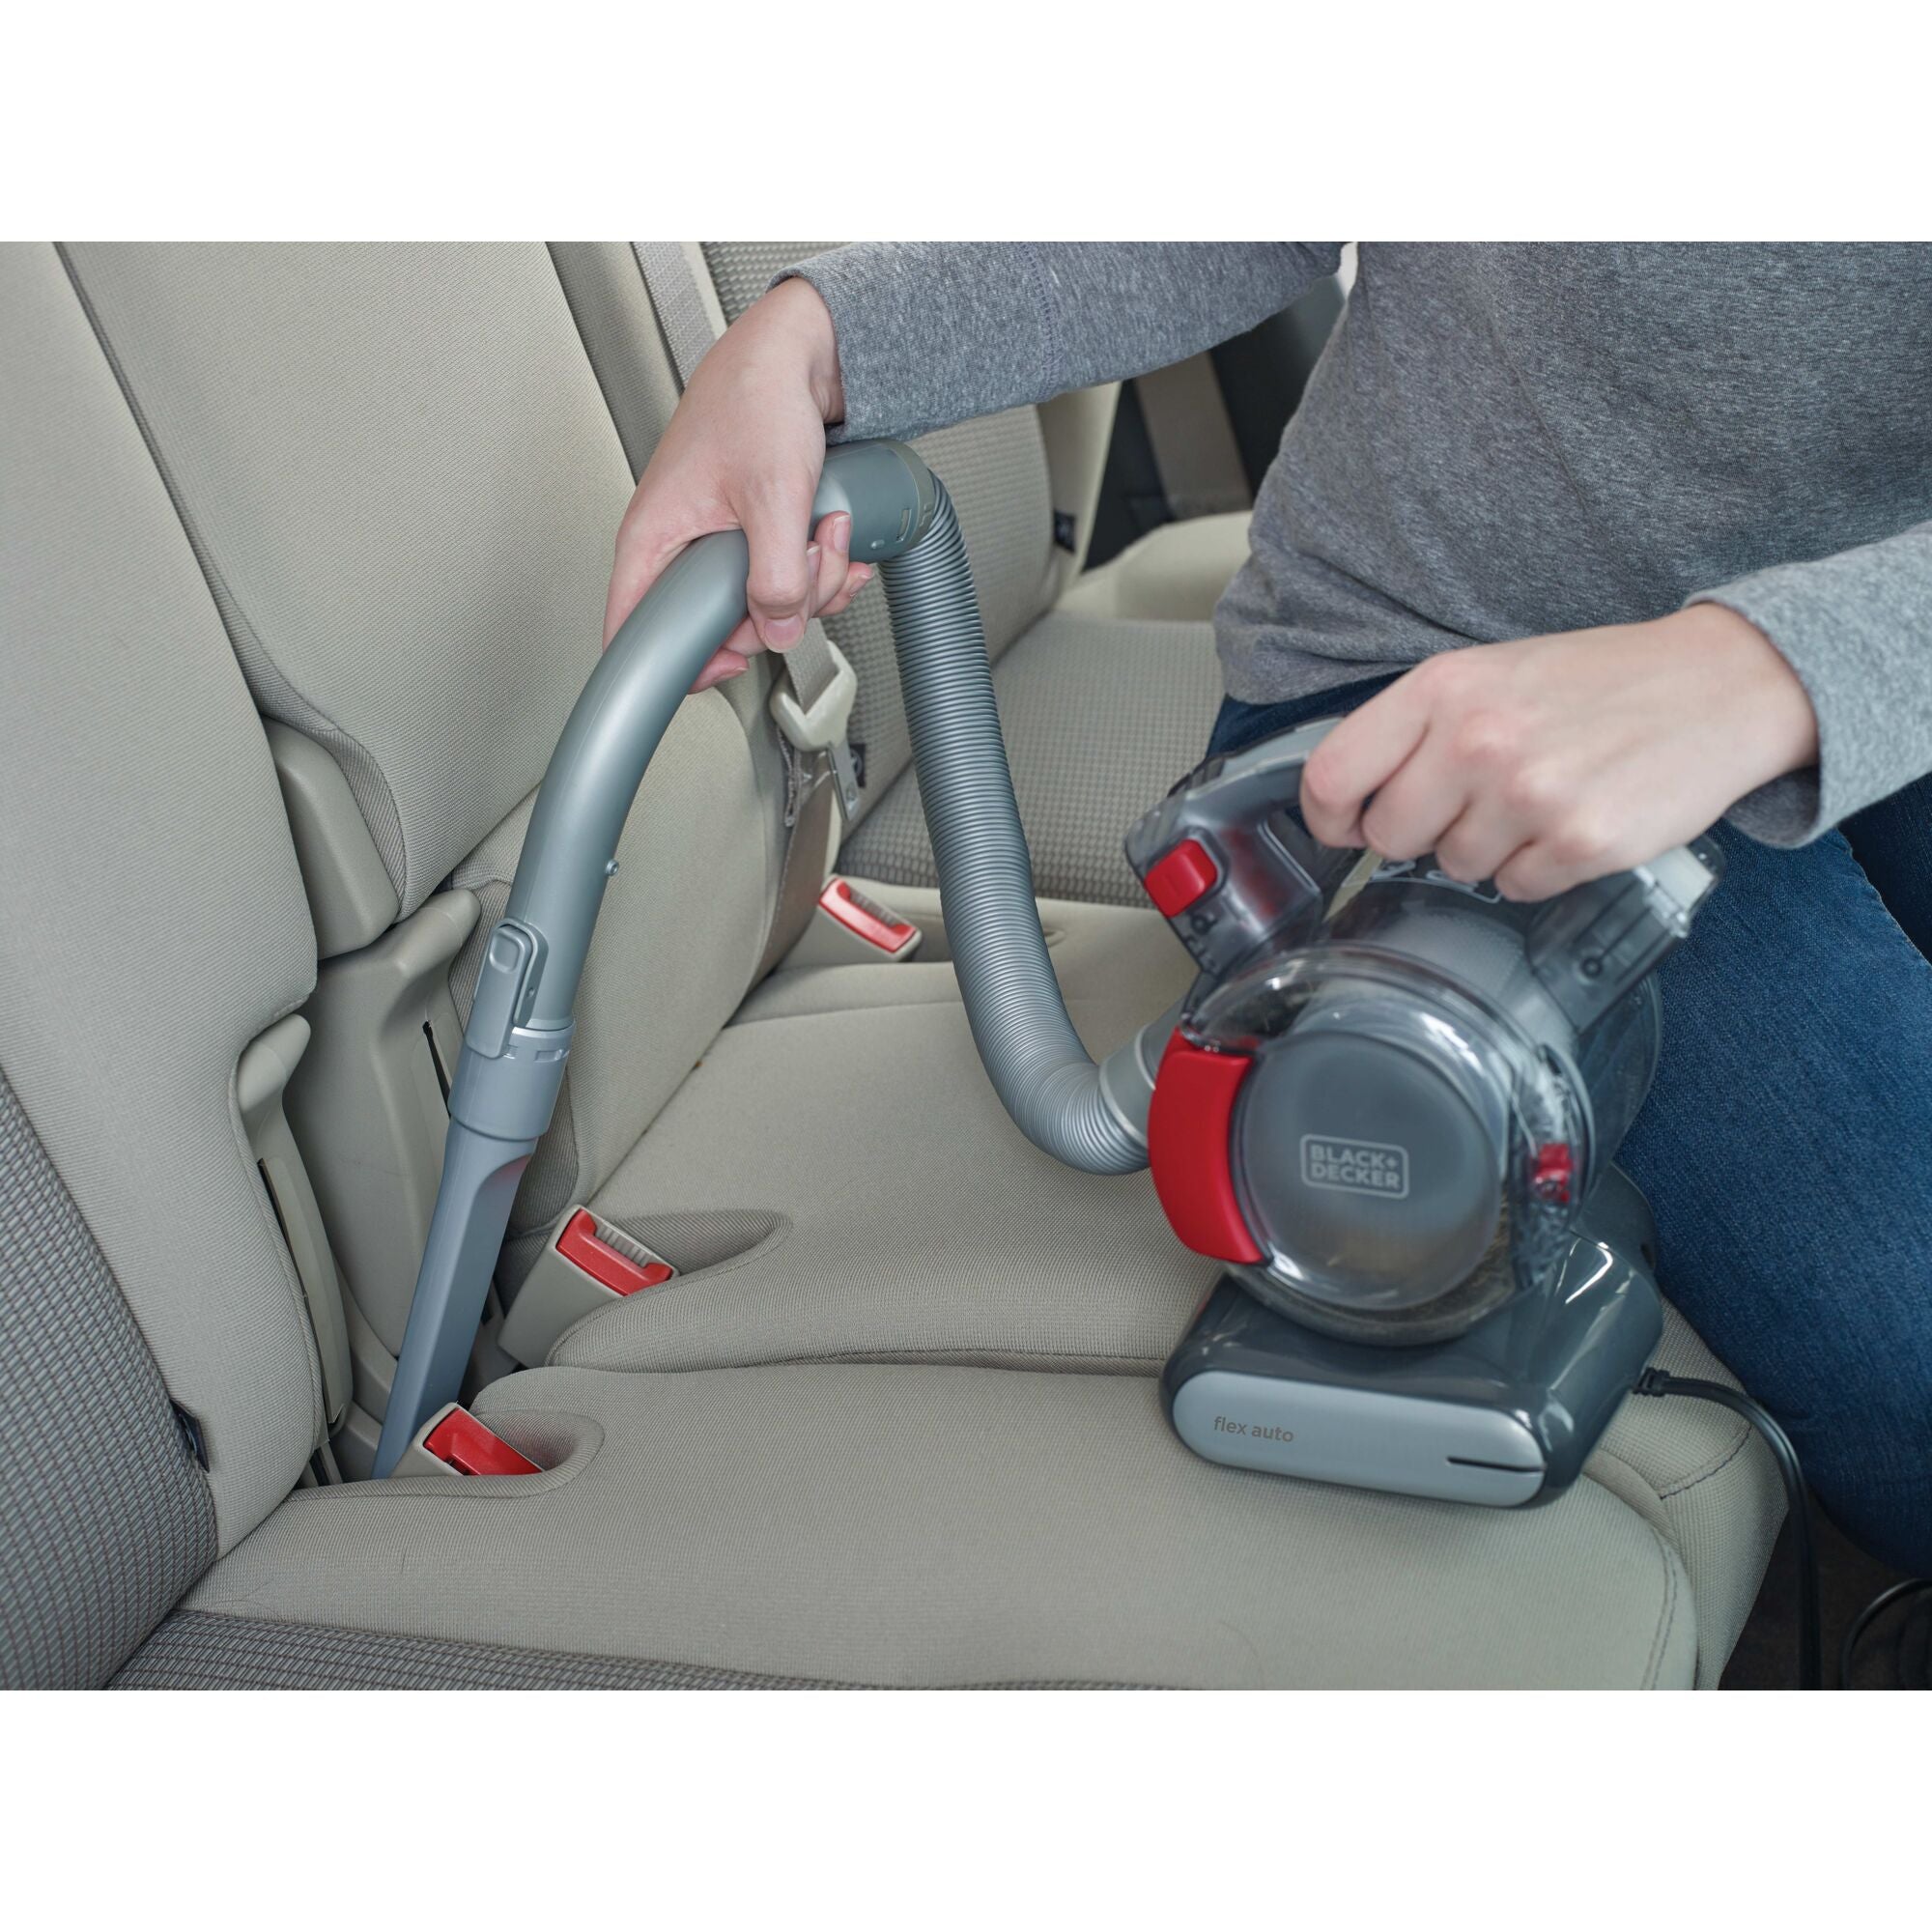 BLACK+DECKER Dustbuster Flex 12-Volt Cordless Car Handheld Vacuum